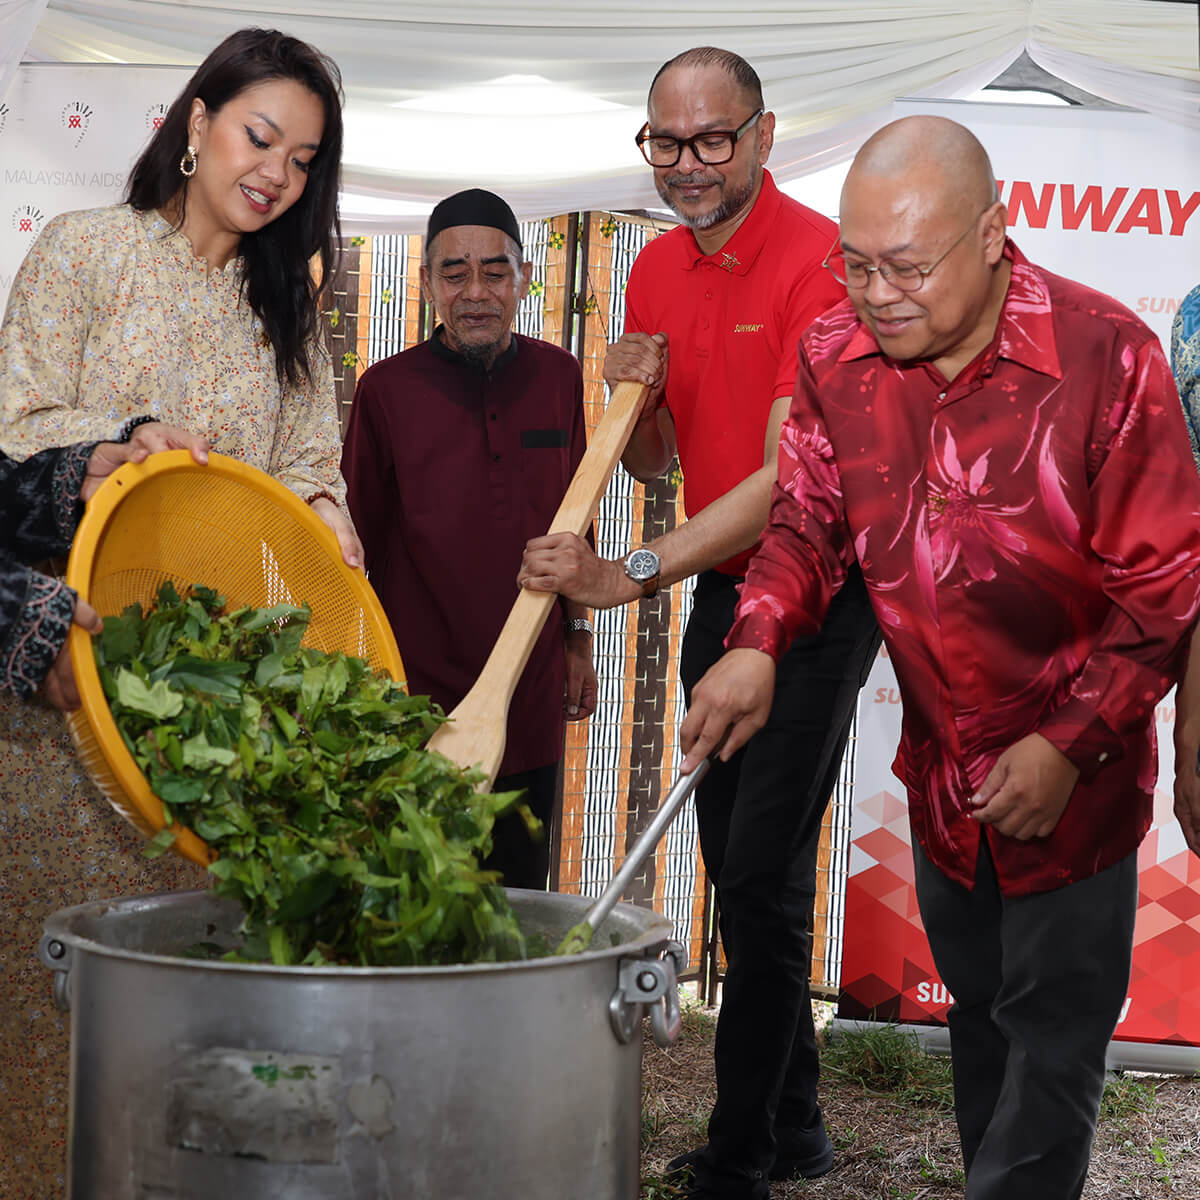 A full body shot of Mimi Fly alongside Sunway and Malaysian AIDS Foundation senior leaders stirring bubur lambuk